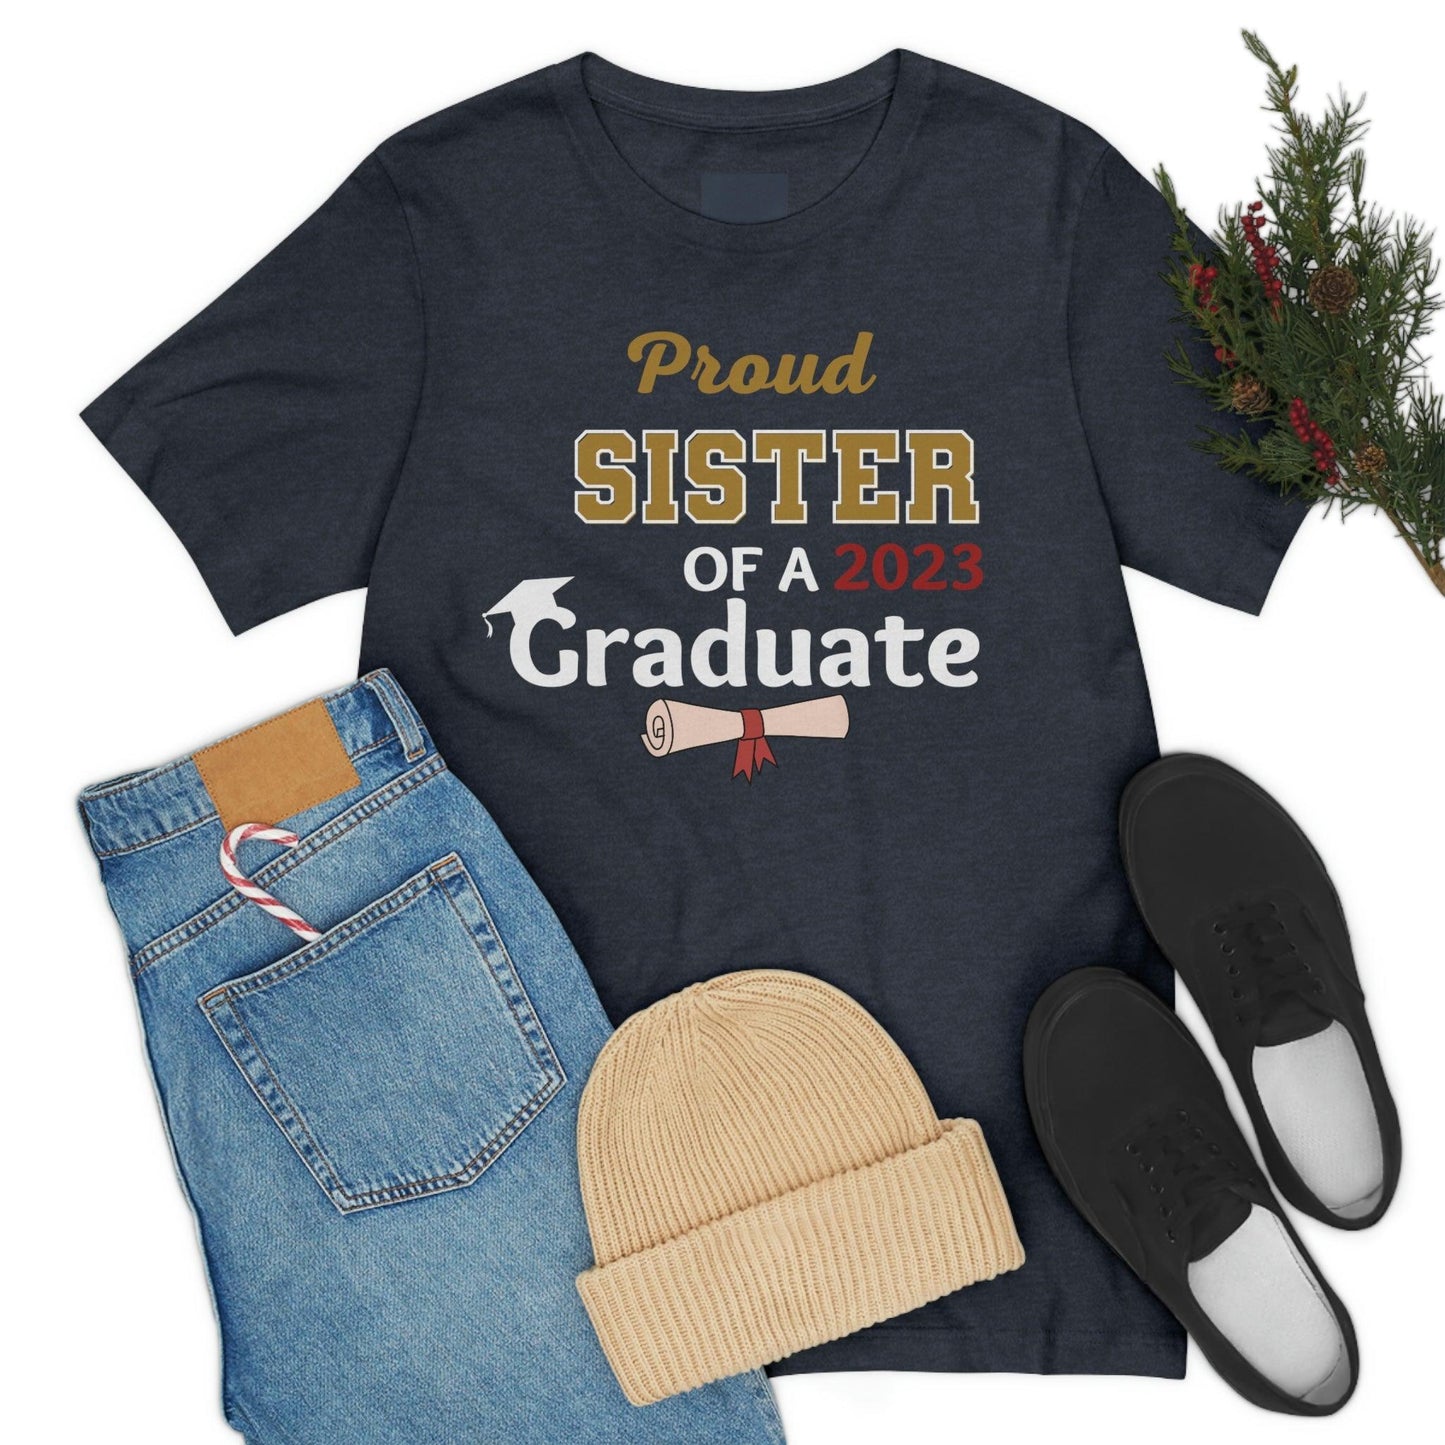 Proud Sister of a Graduate shirt - Graduation shirt - Graduation gift